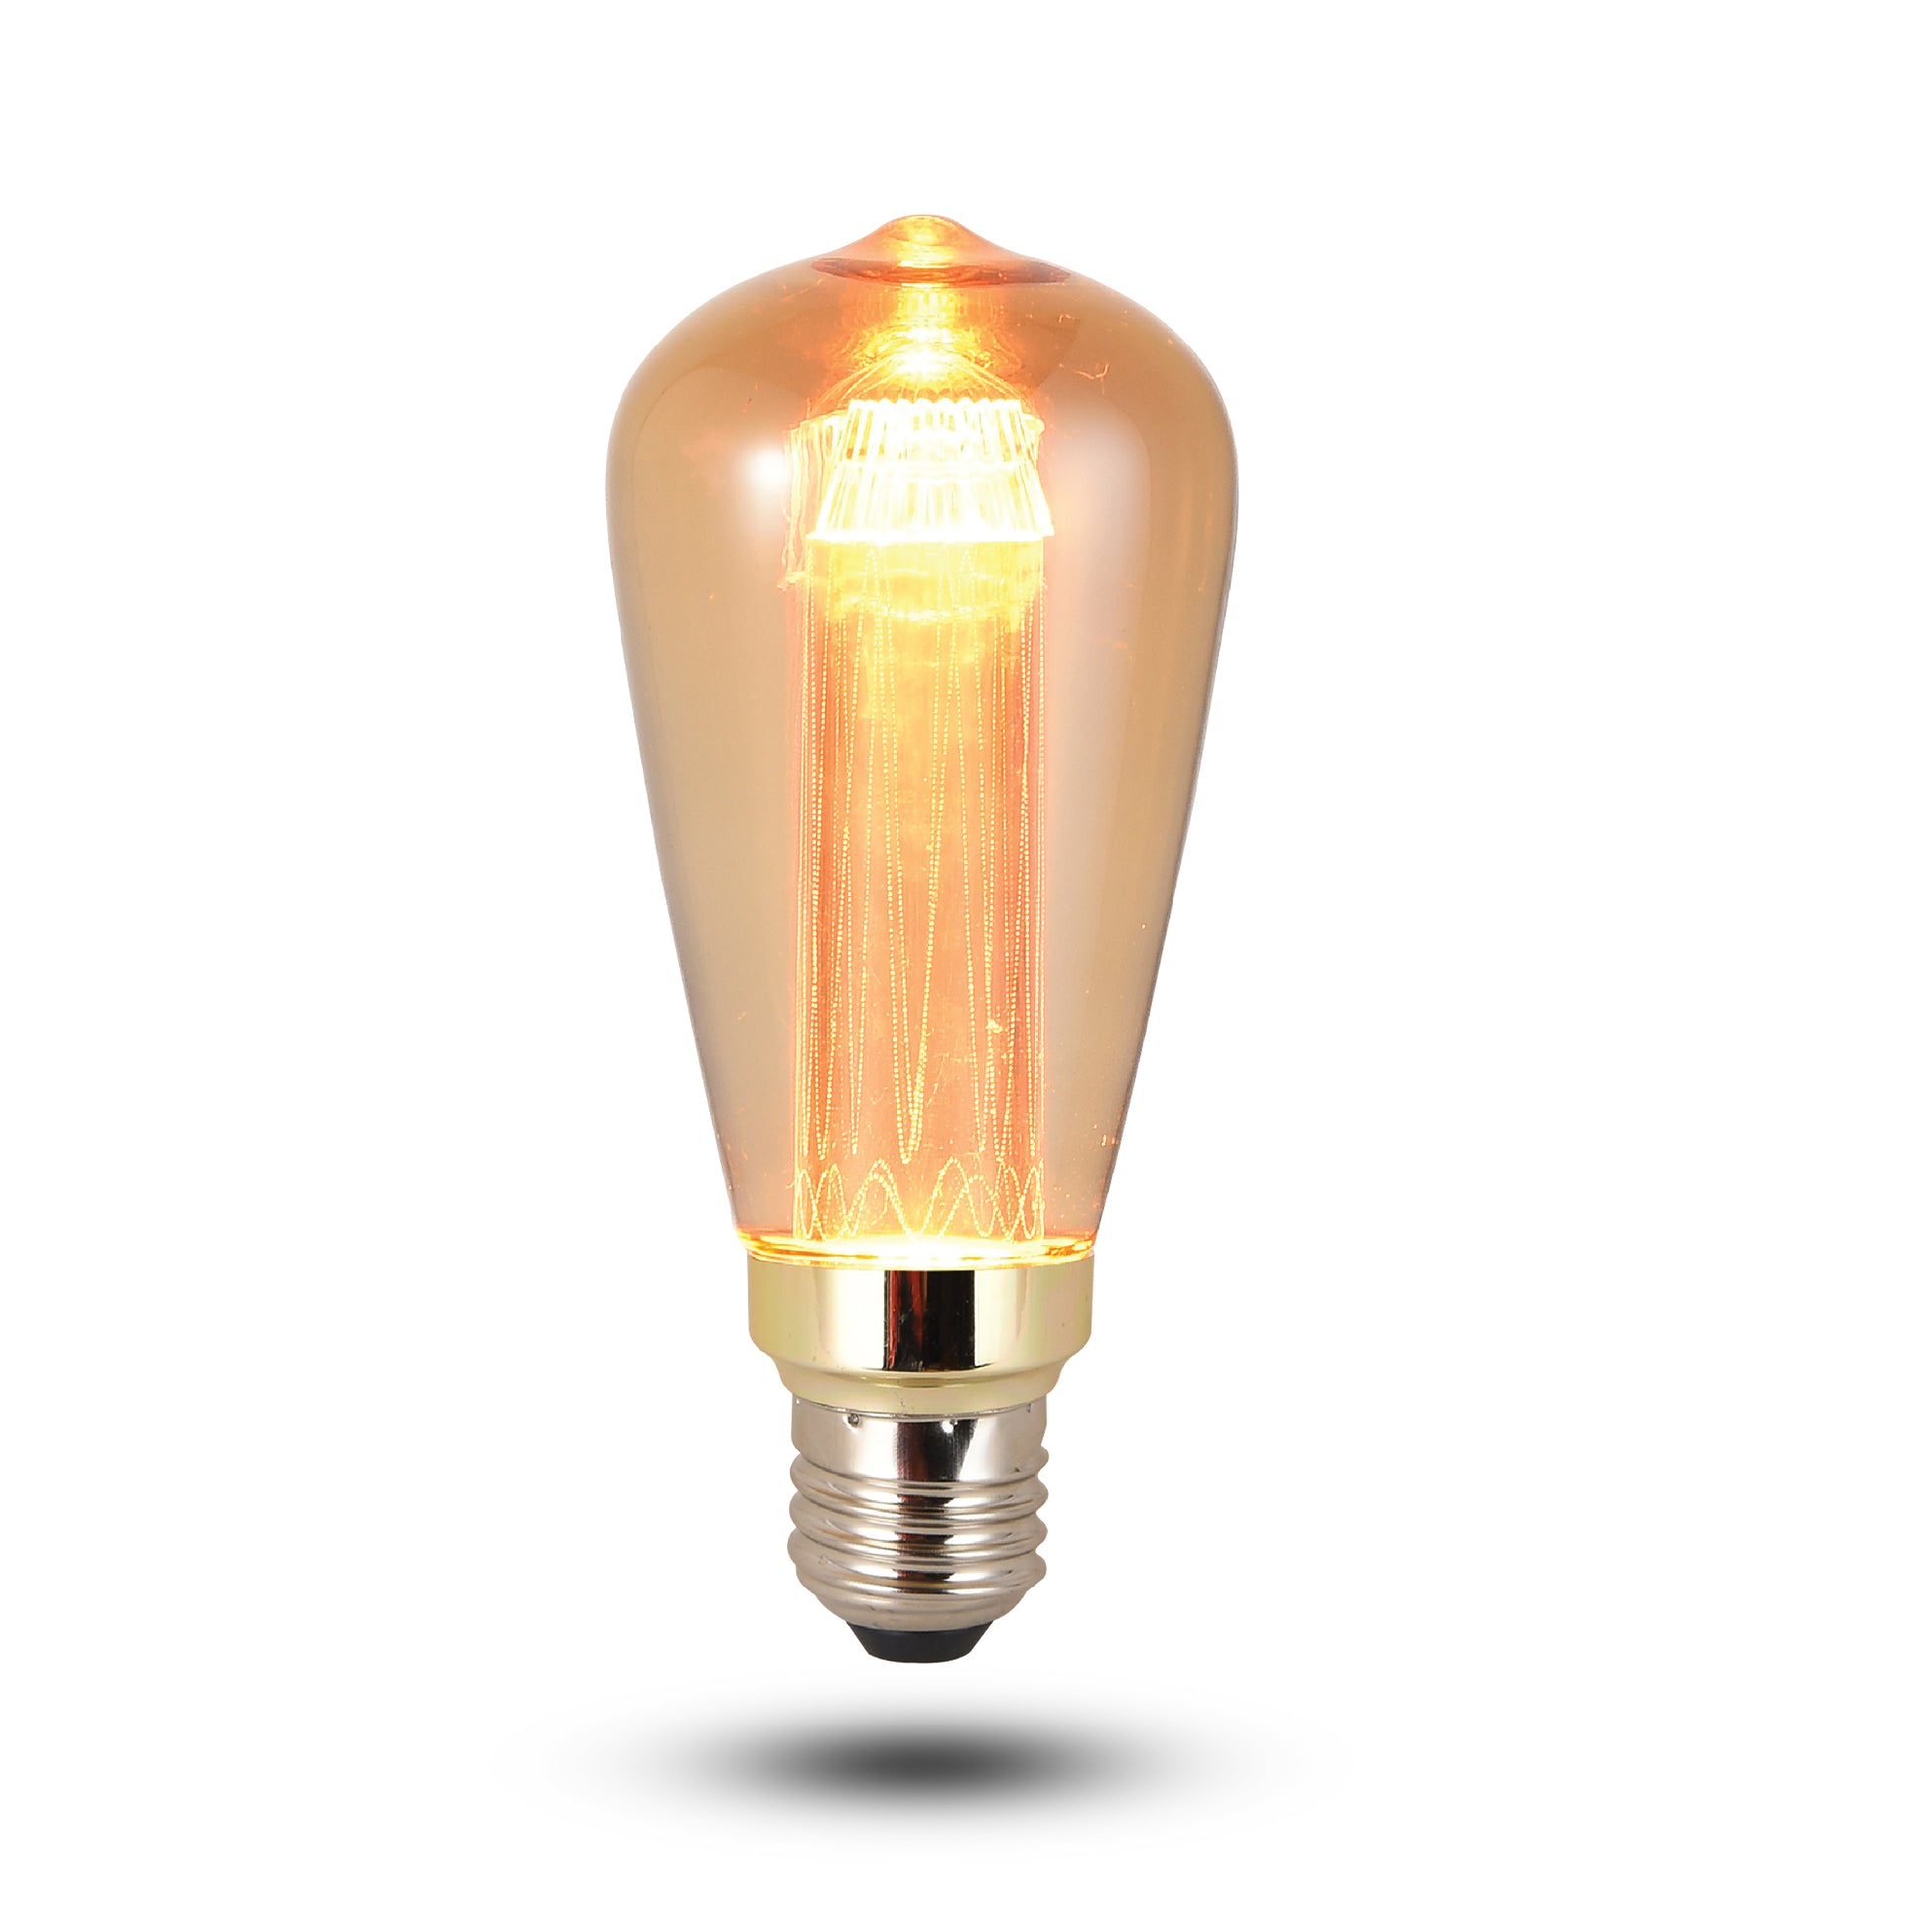 E27 Vintage Edison light bulb 3W Non dimmable filament bulb-1 Pack